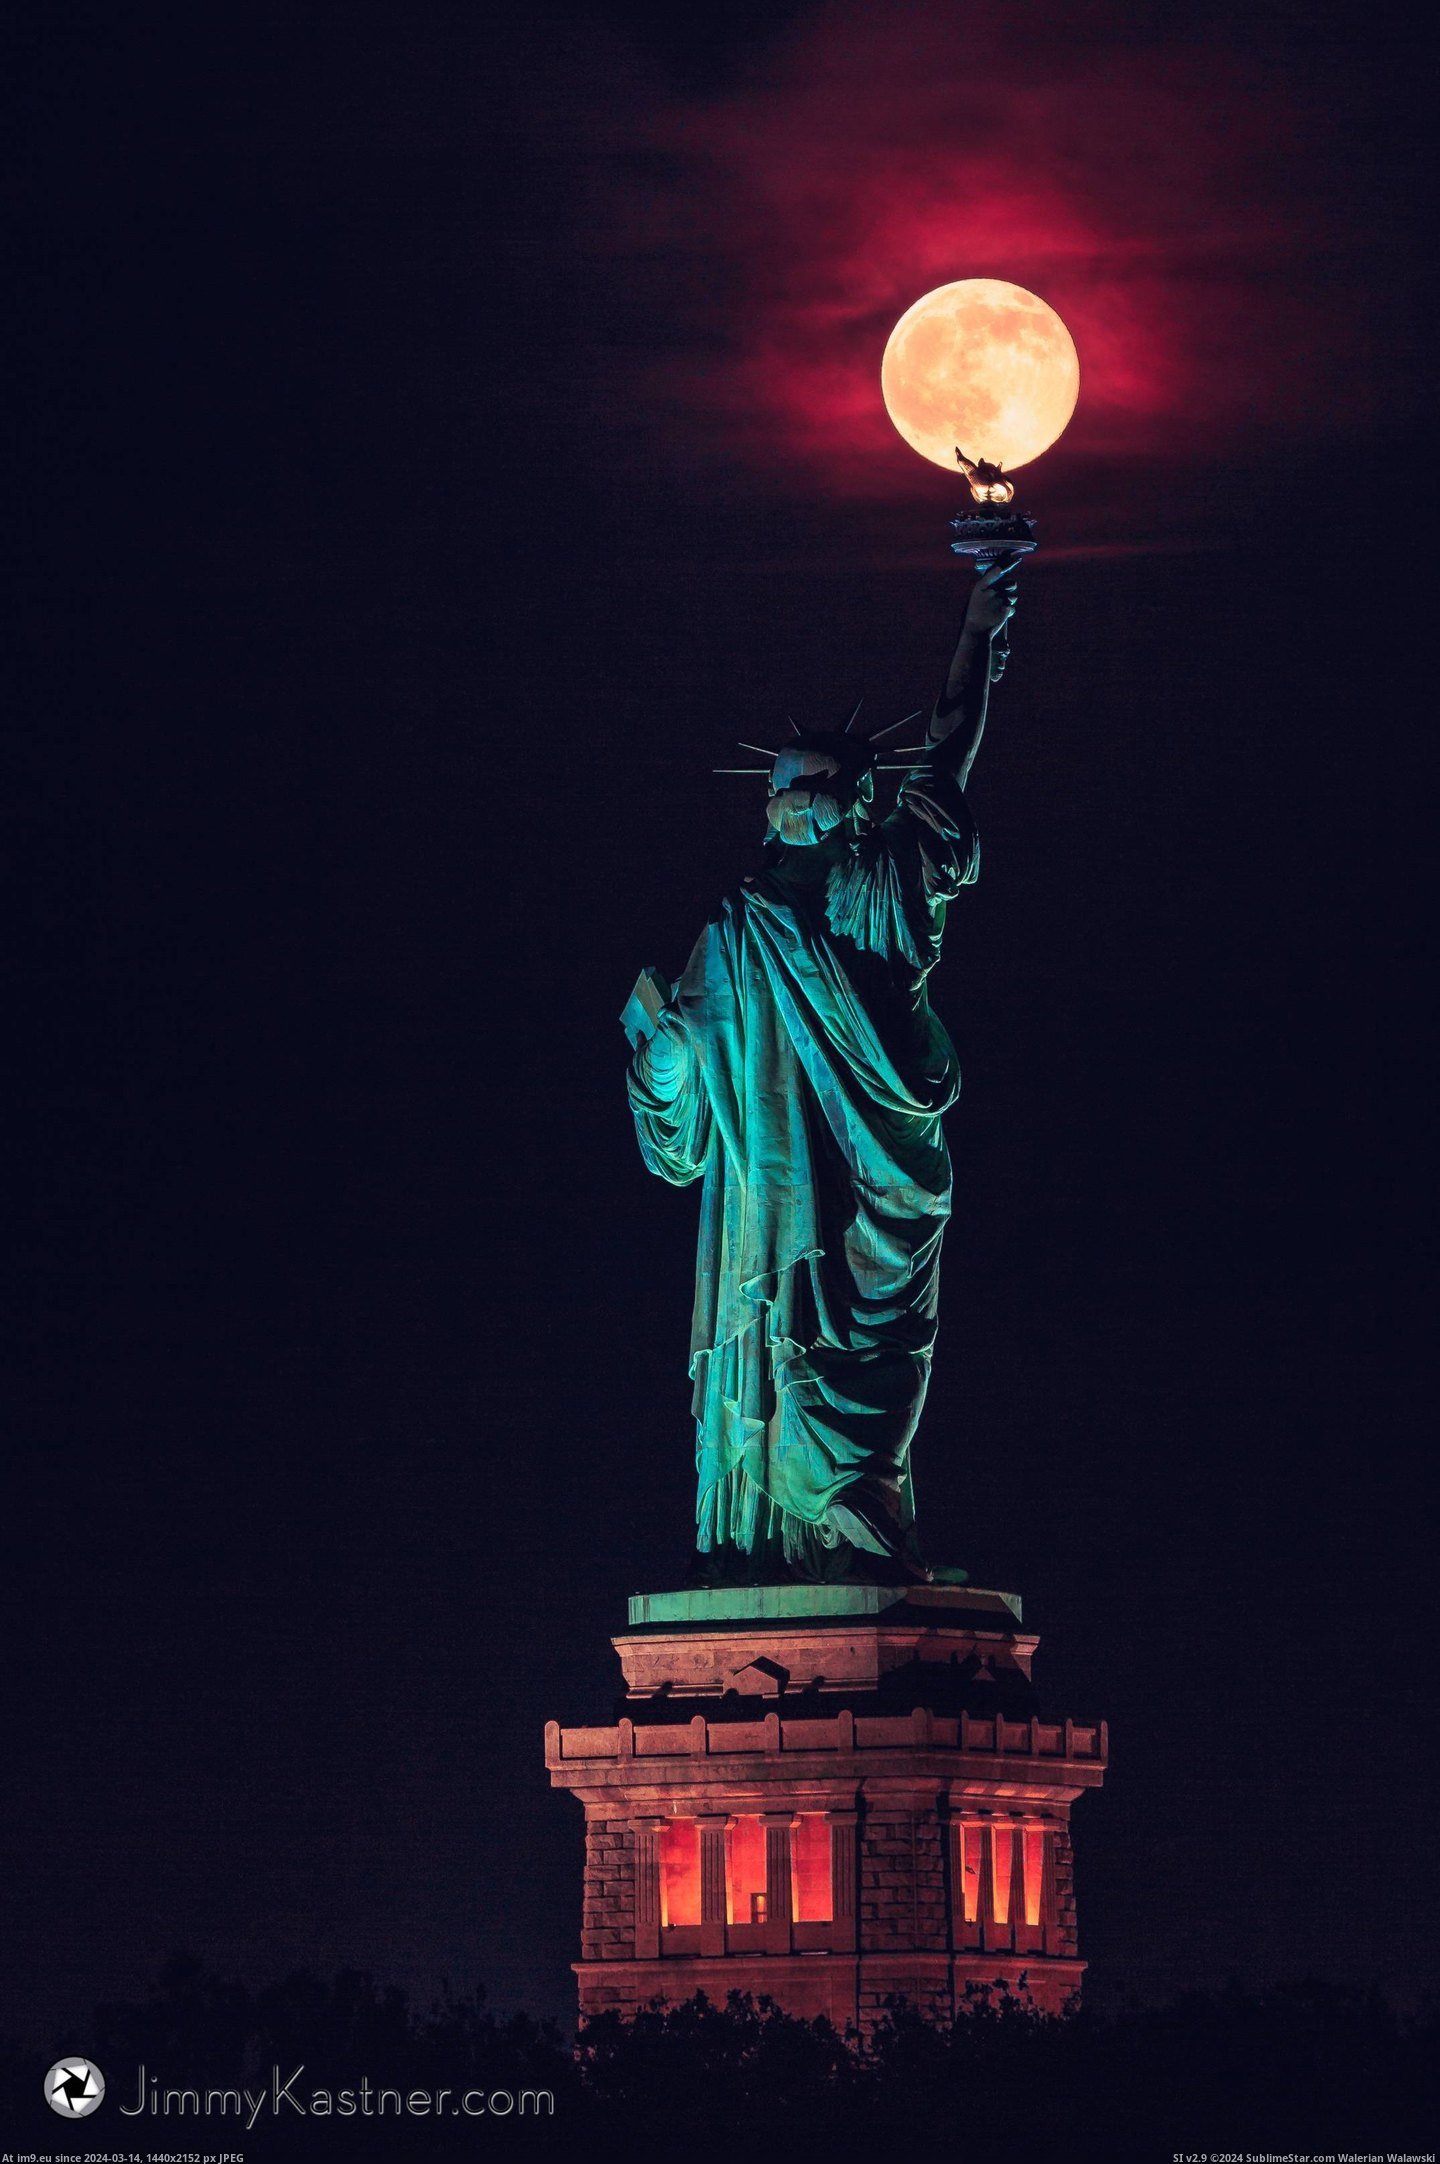 #Night #Full #Summer #Solstice #Balancing #Liberty #Moon #Rare #Statue [Pics] Last night's rare summer solstice full moon balancing on the Statue of Liberty's torch Pic. (Image of album My r/PICS favs))